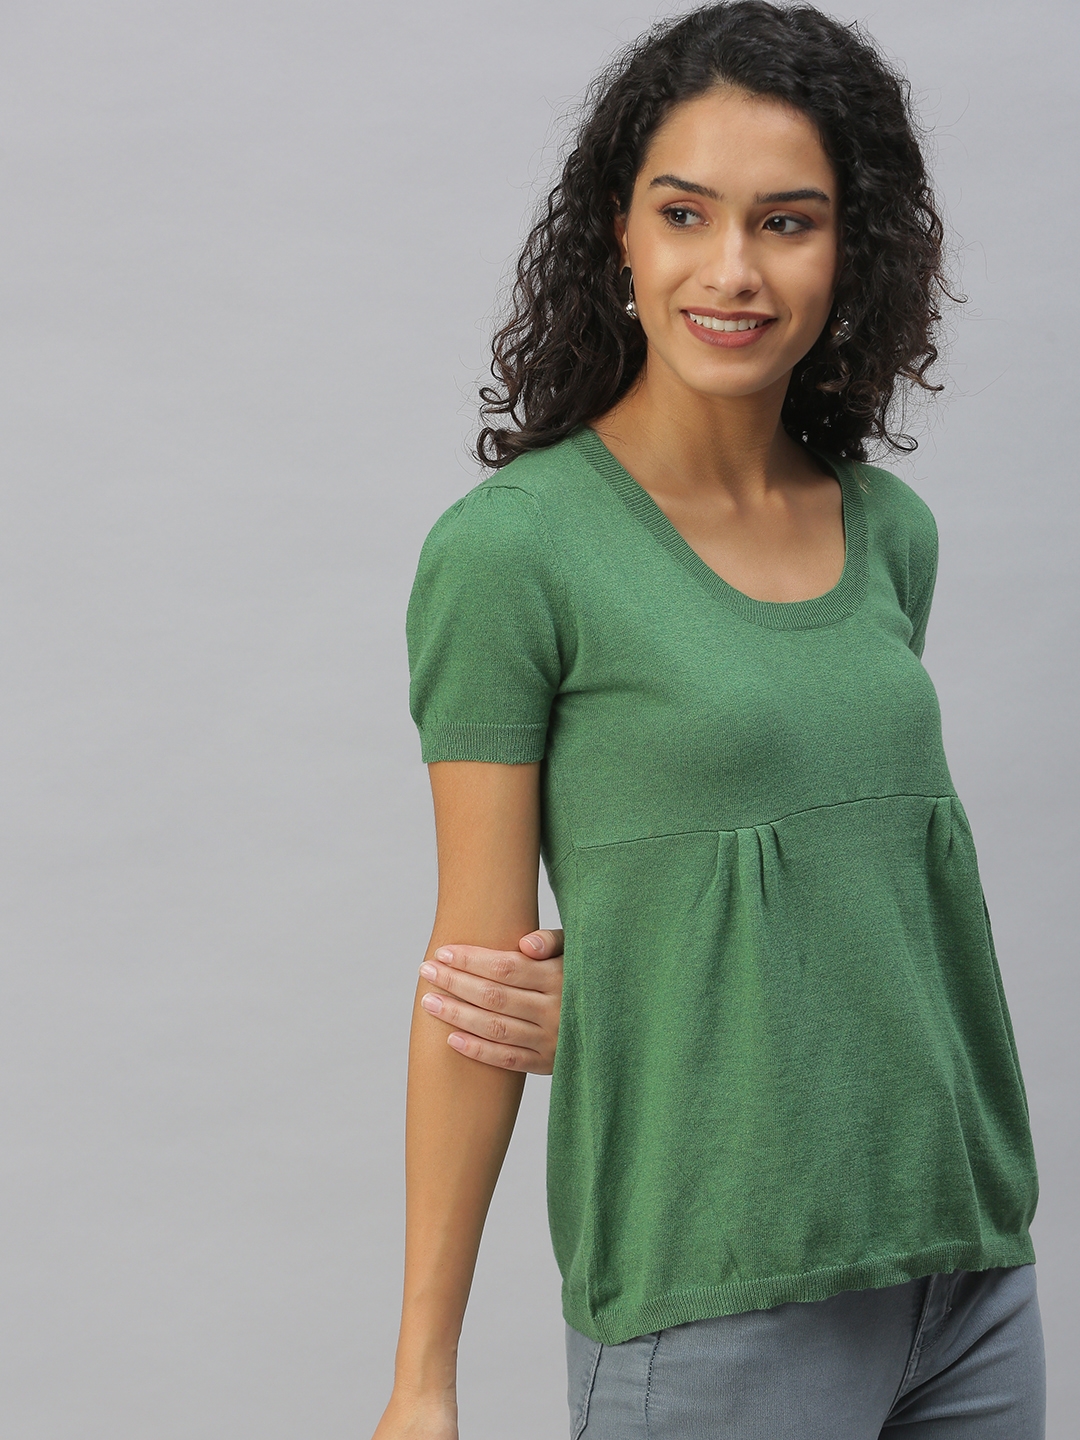 SHOWOFF Women's Round Neck Solid Green Regular Top